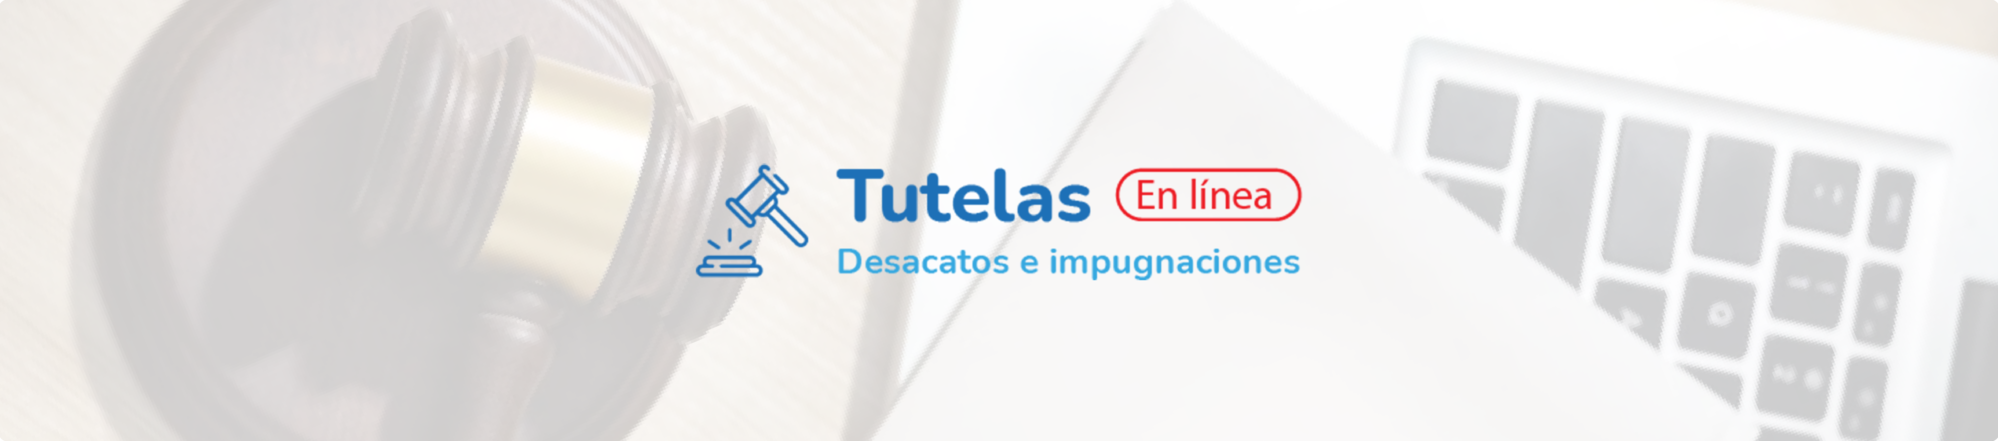 base-banners_tutelas_-impugnaciones-desacatos_1.png - 413.53 kB